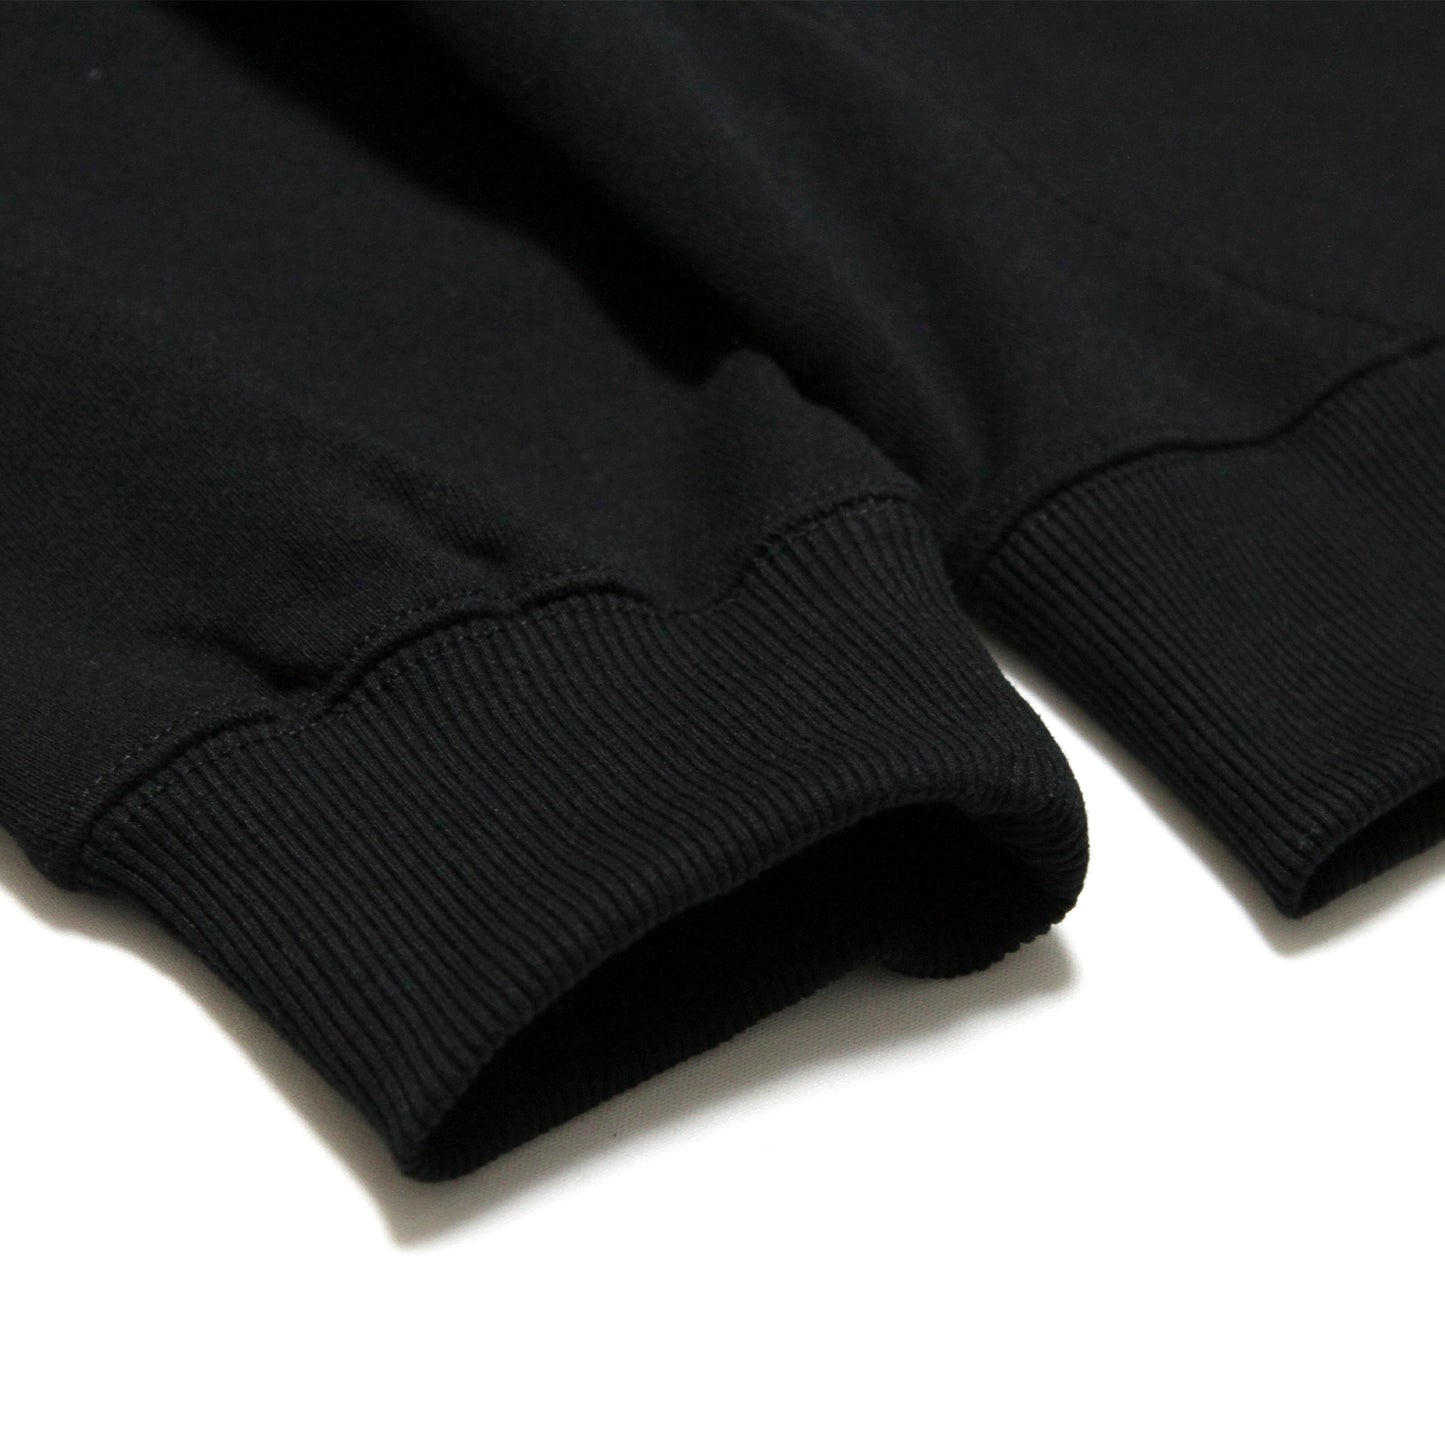 LOOSE - Half Zip Pullover Sweatshirt/Black